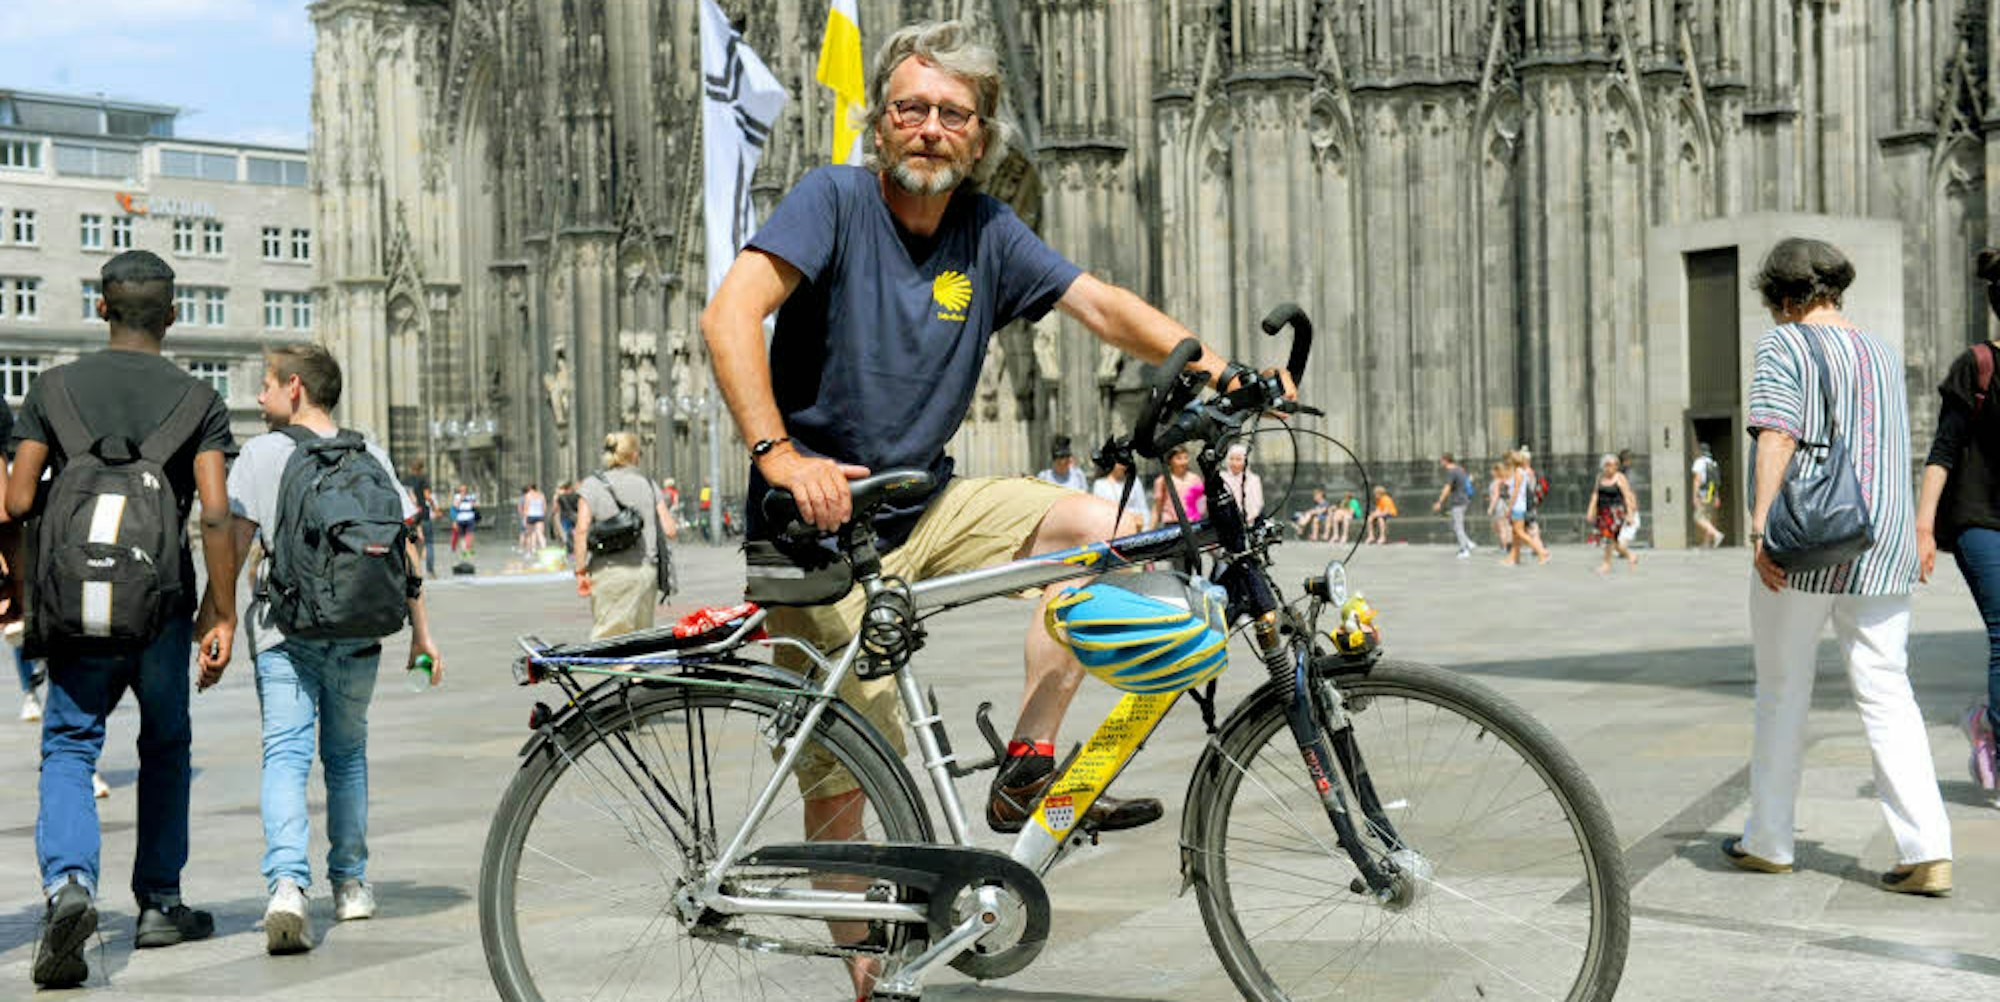 Der 66-Jährige am Ausgangspunkt der Fahrt vor dem Kölner Dom